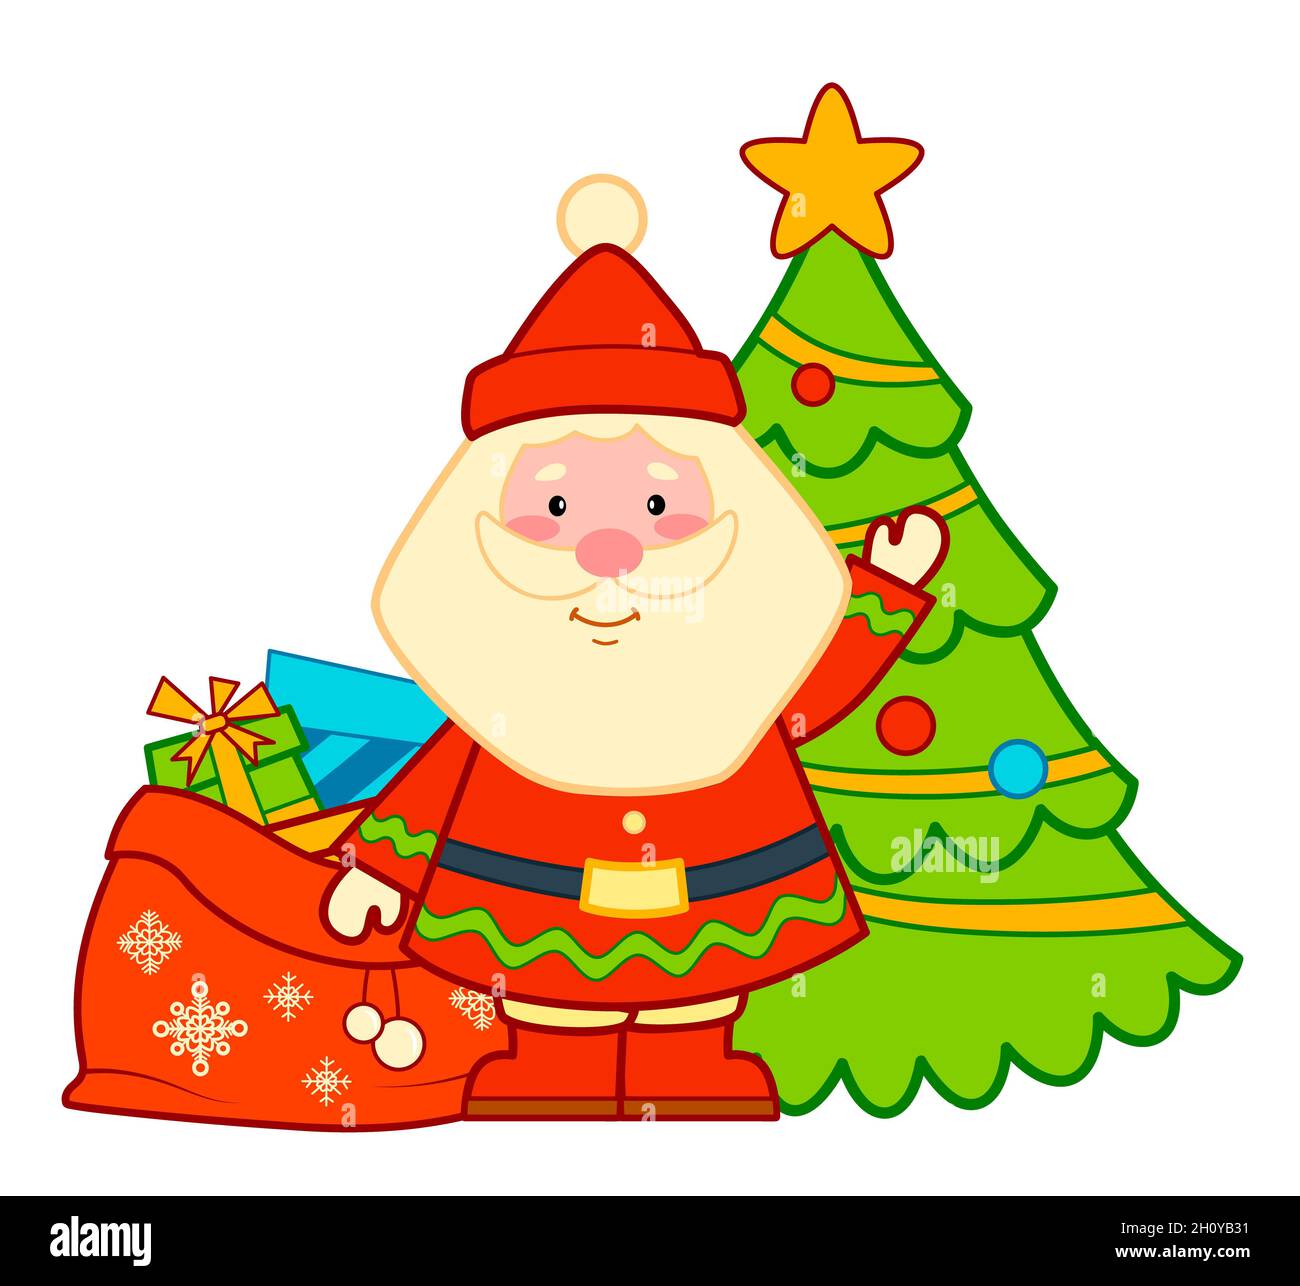 Christmas cartoons clip art . Gift clipart illustration Stock Photo - Alamy